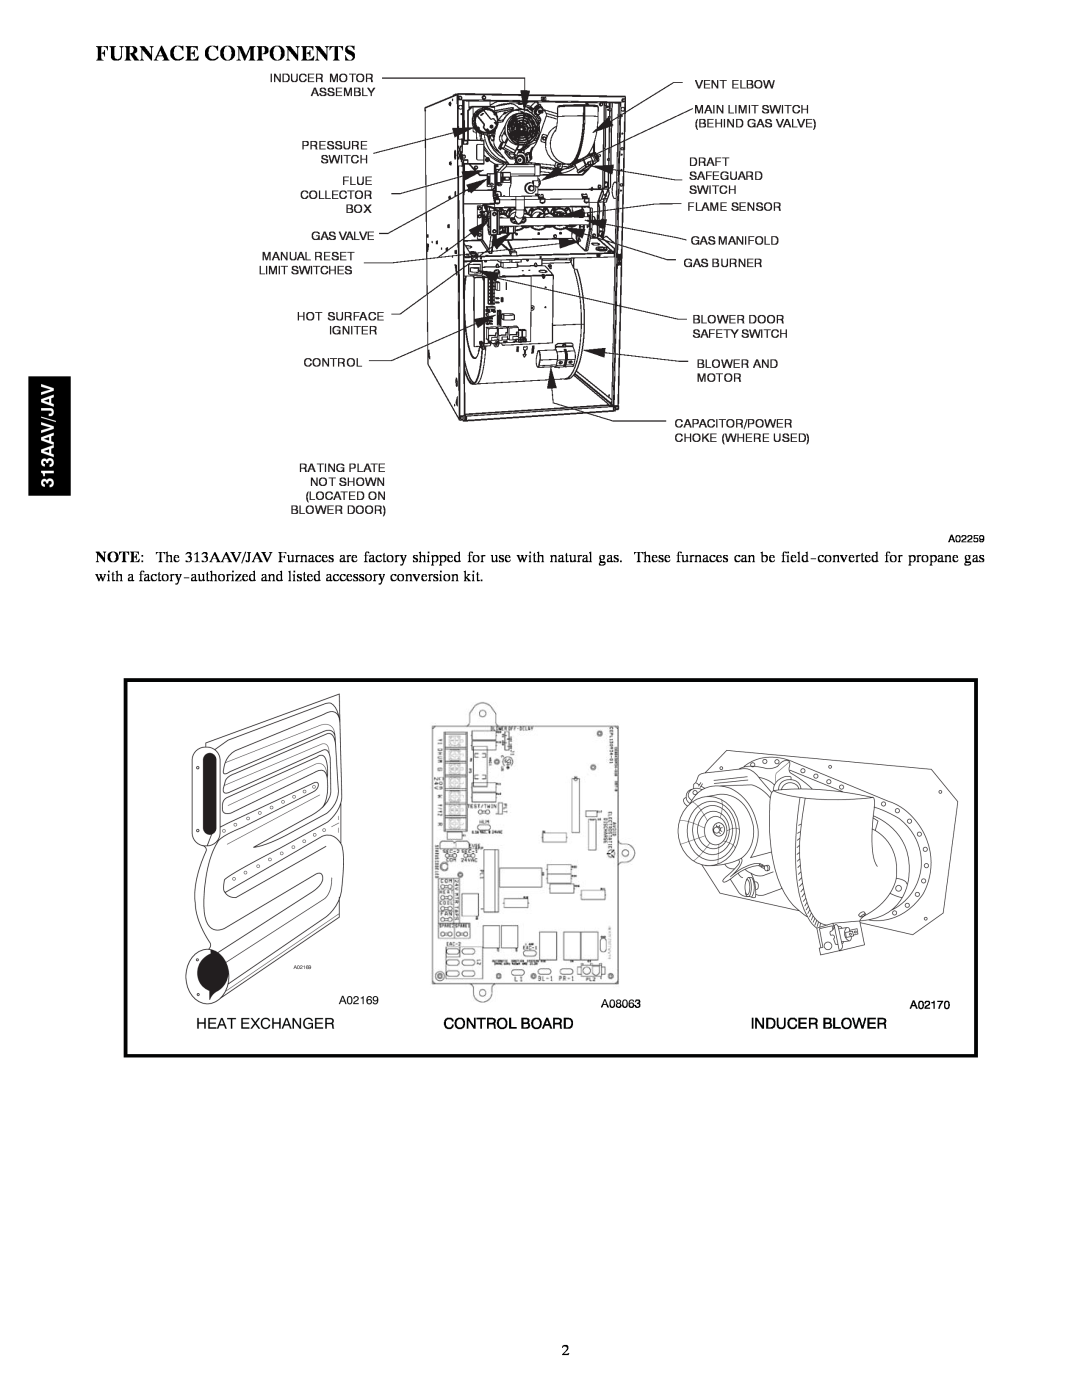 Bryant 313AAV/JAV manual Furnace Components 